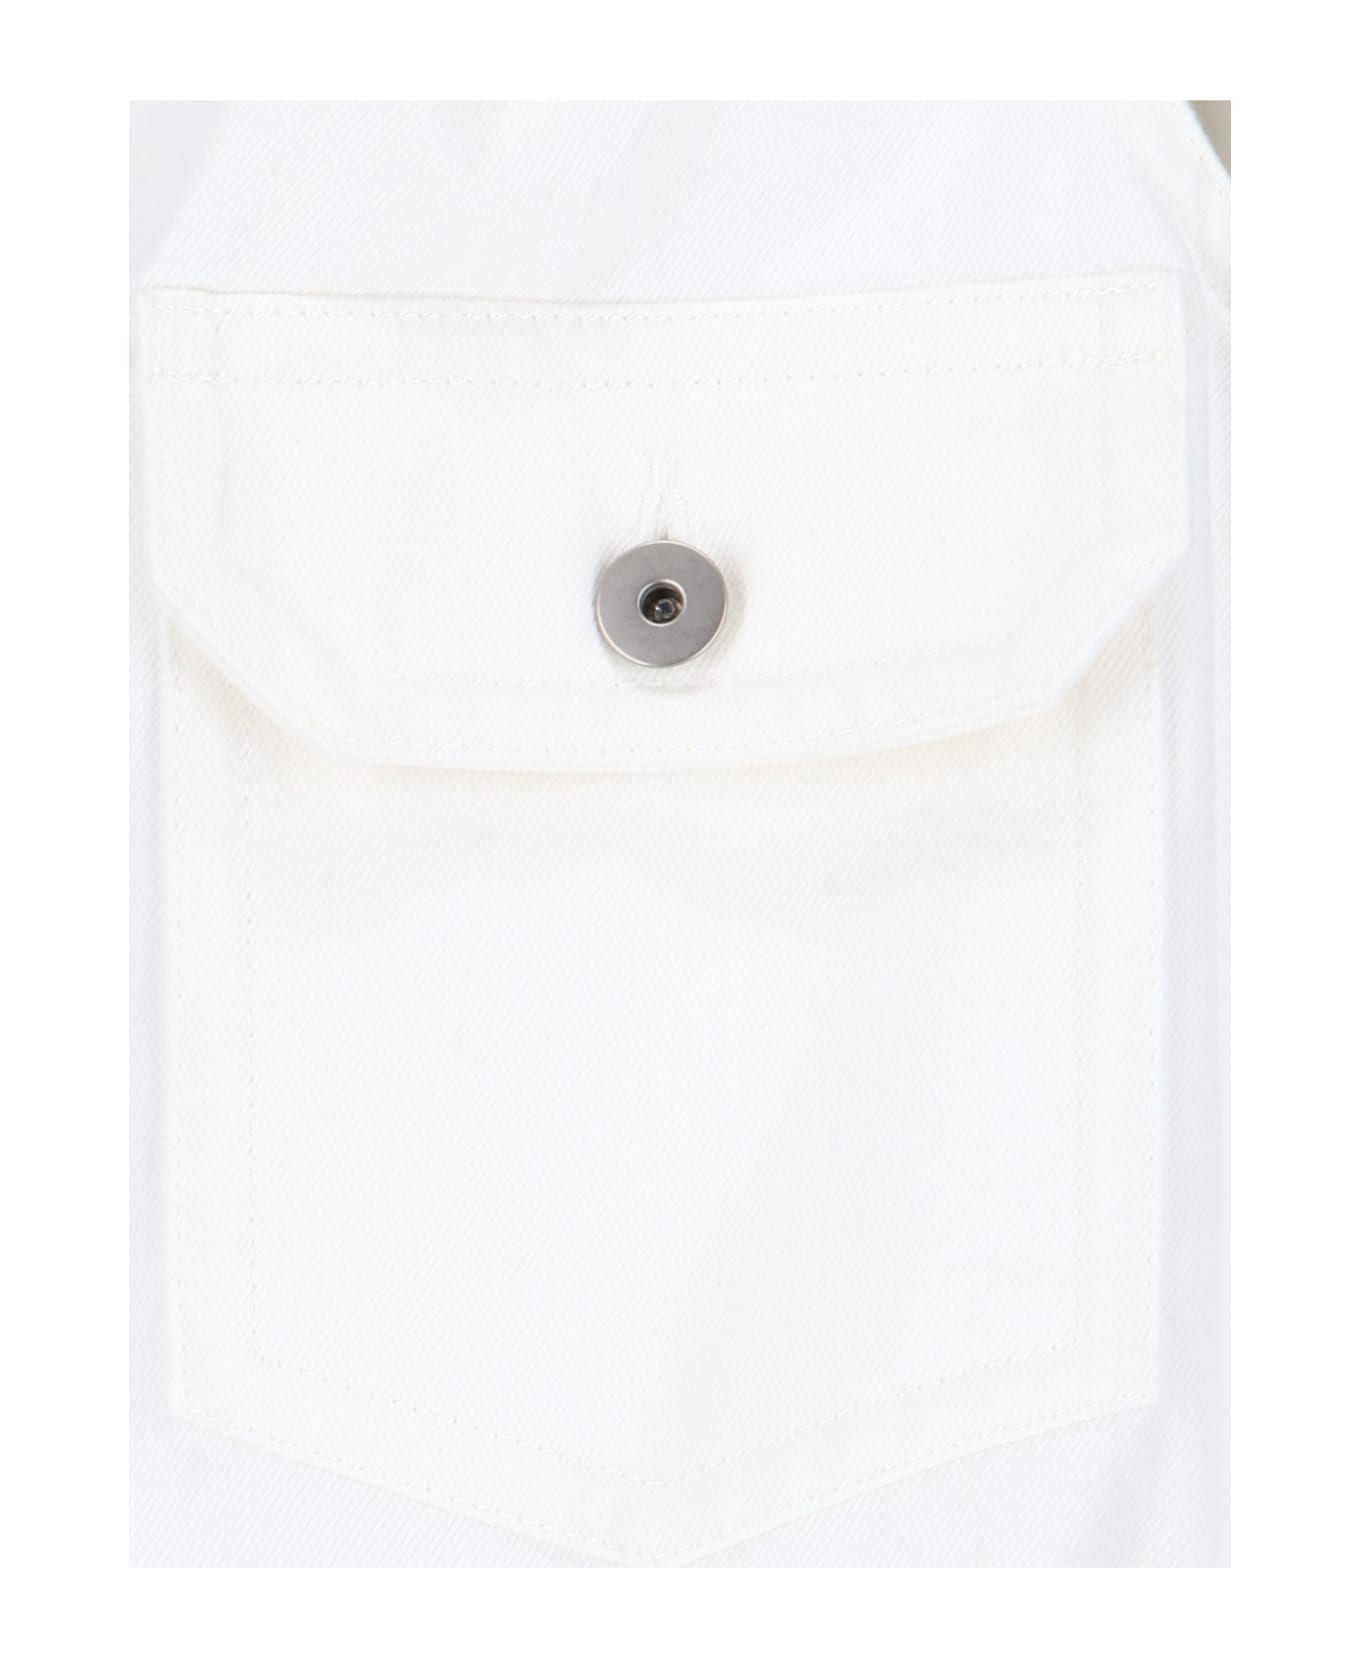 Sacai Sleeveless Shirt Jacket - White